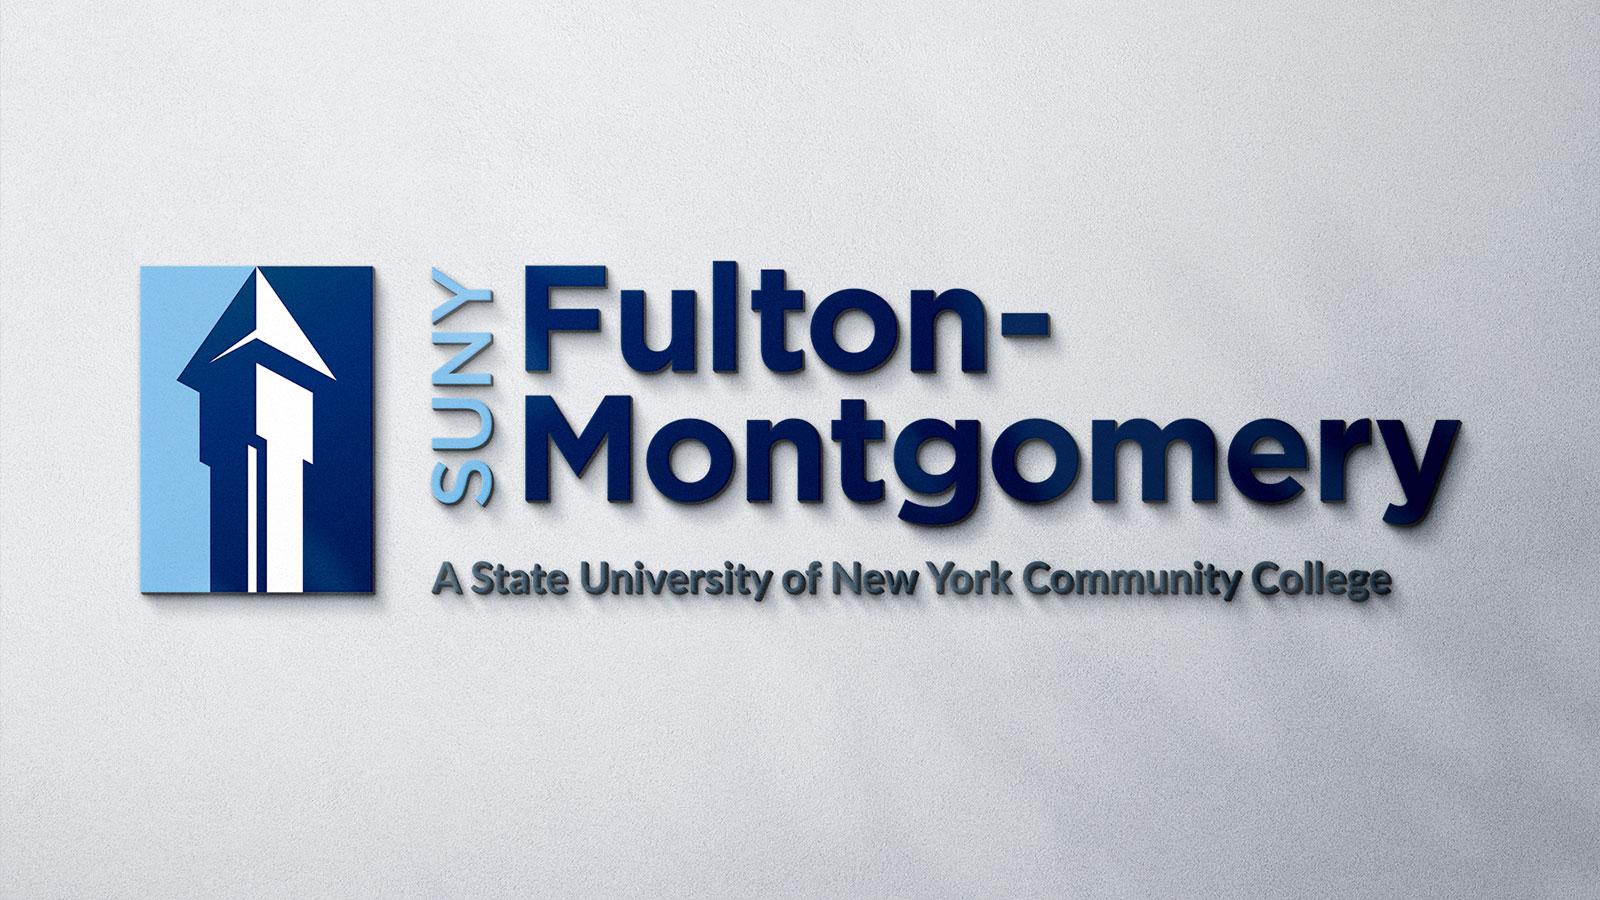 Logo Design & Brand Identity | Fulton-Montgomery Community College